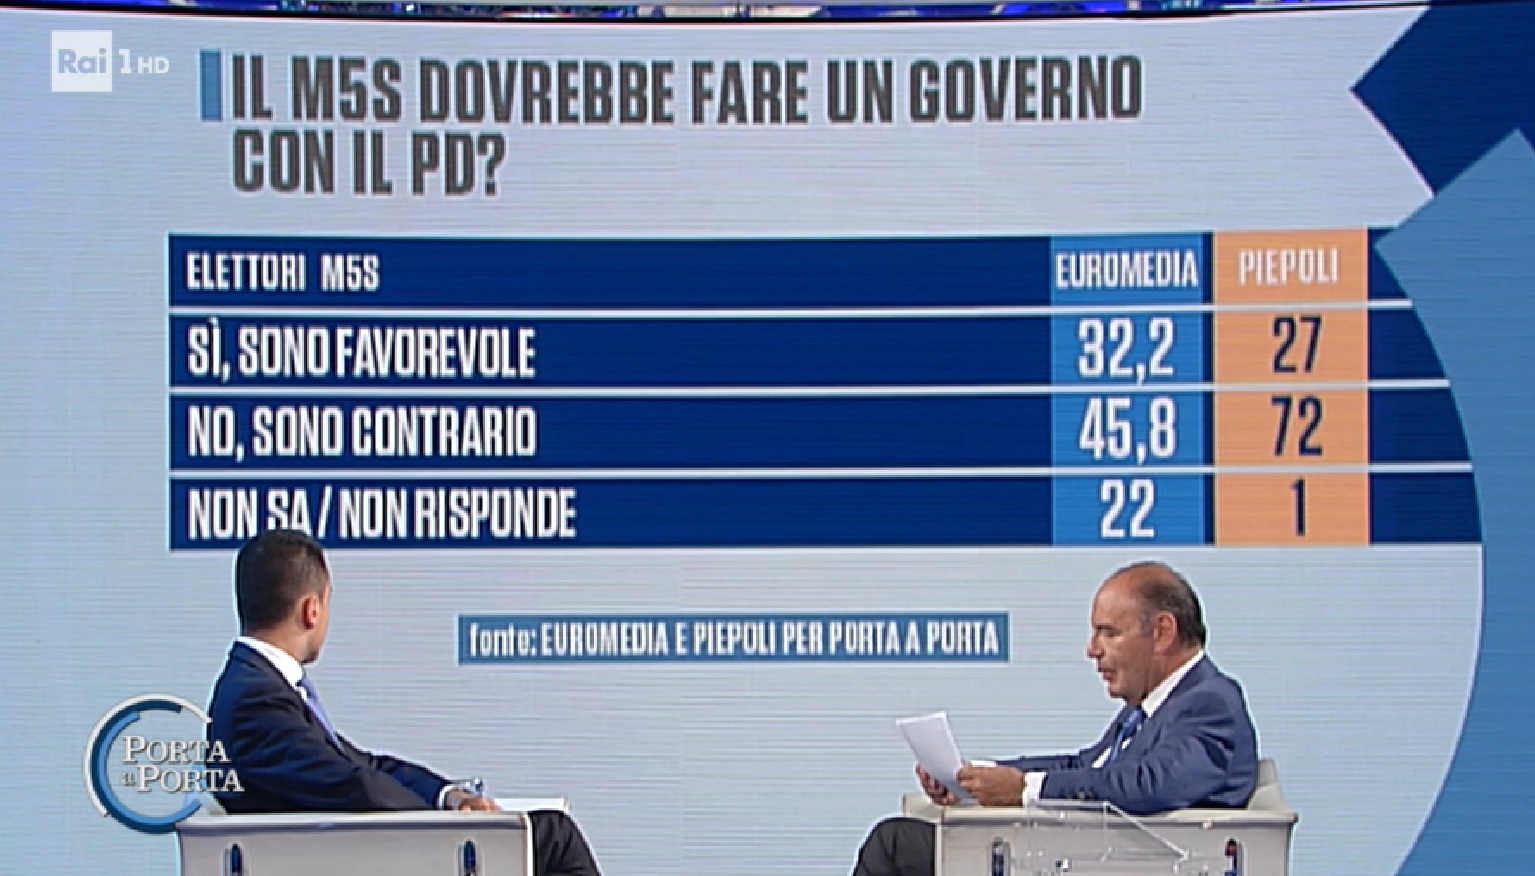 sondaggi politici euromedia piepoli, m5s pd